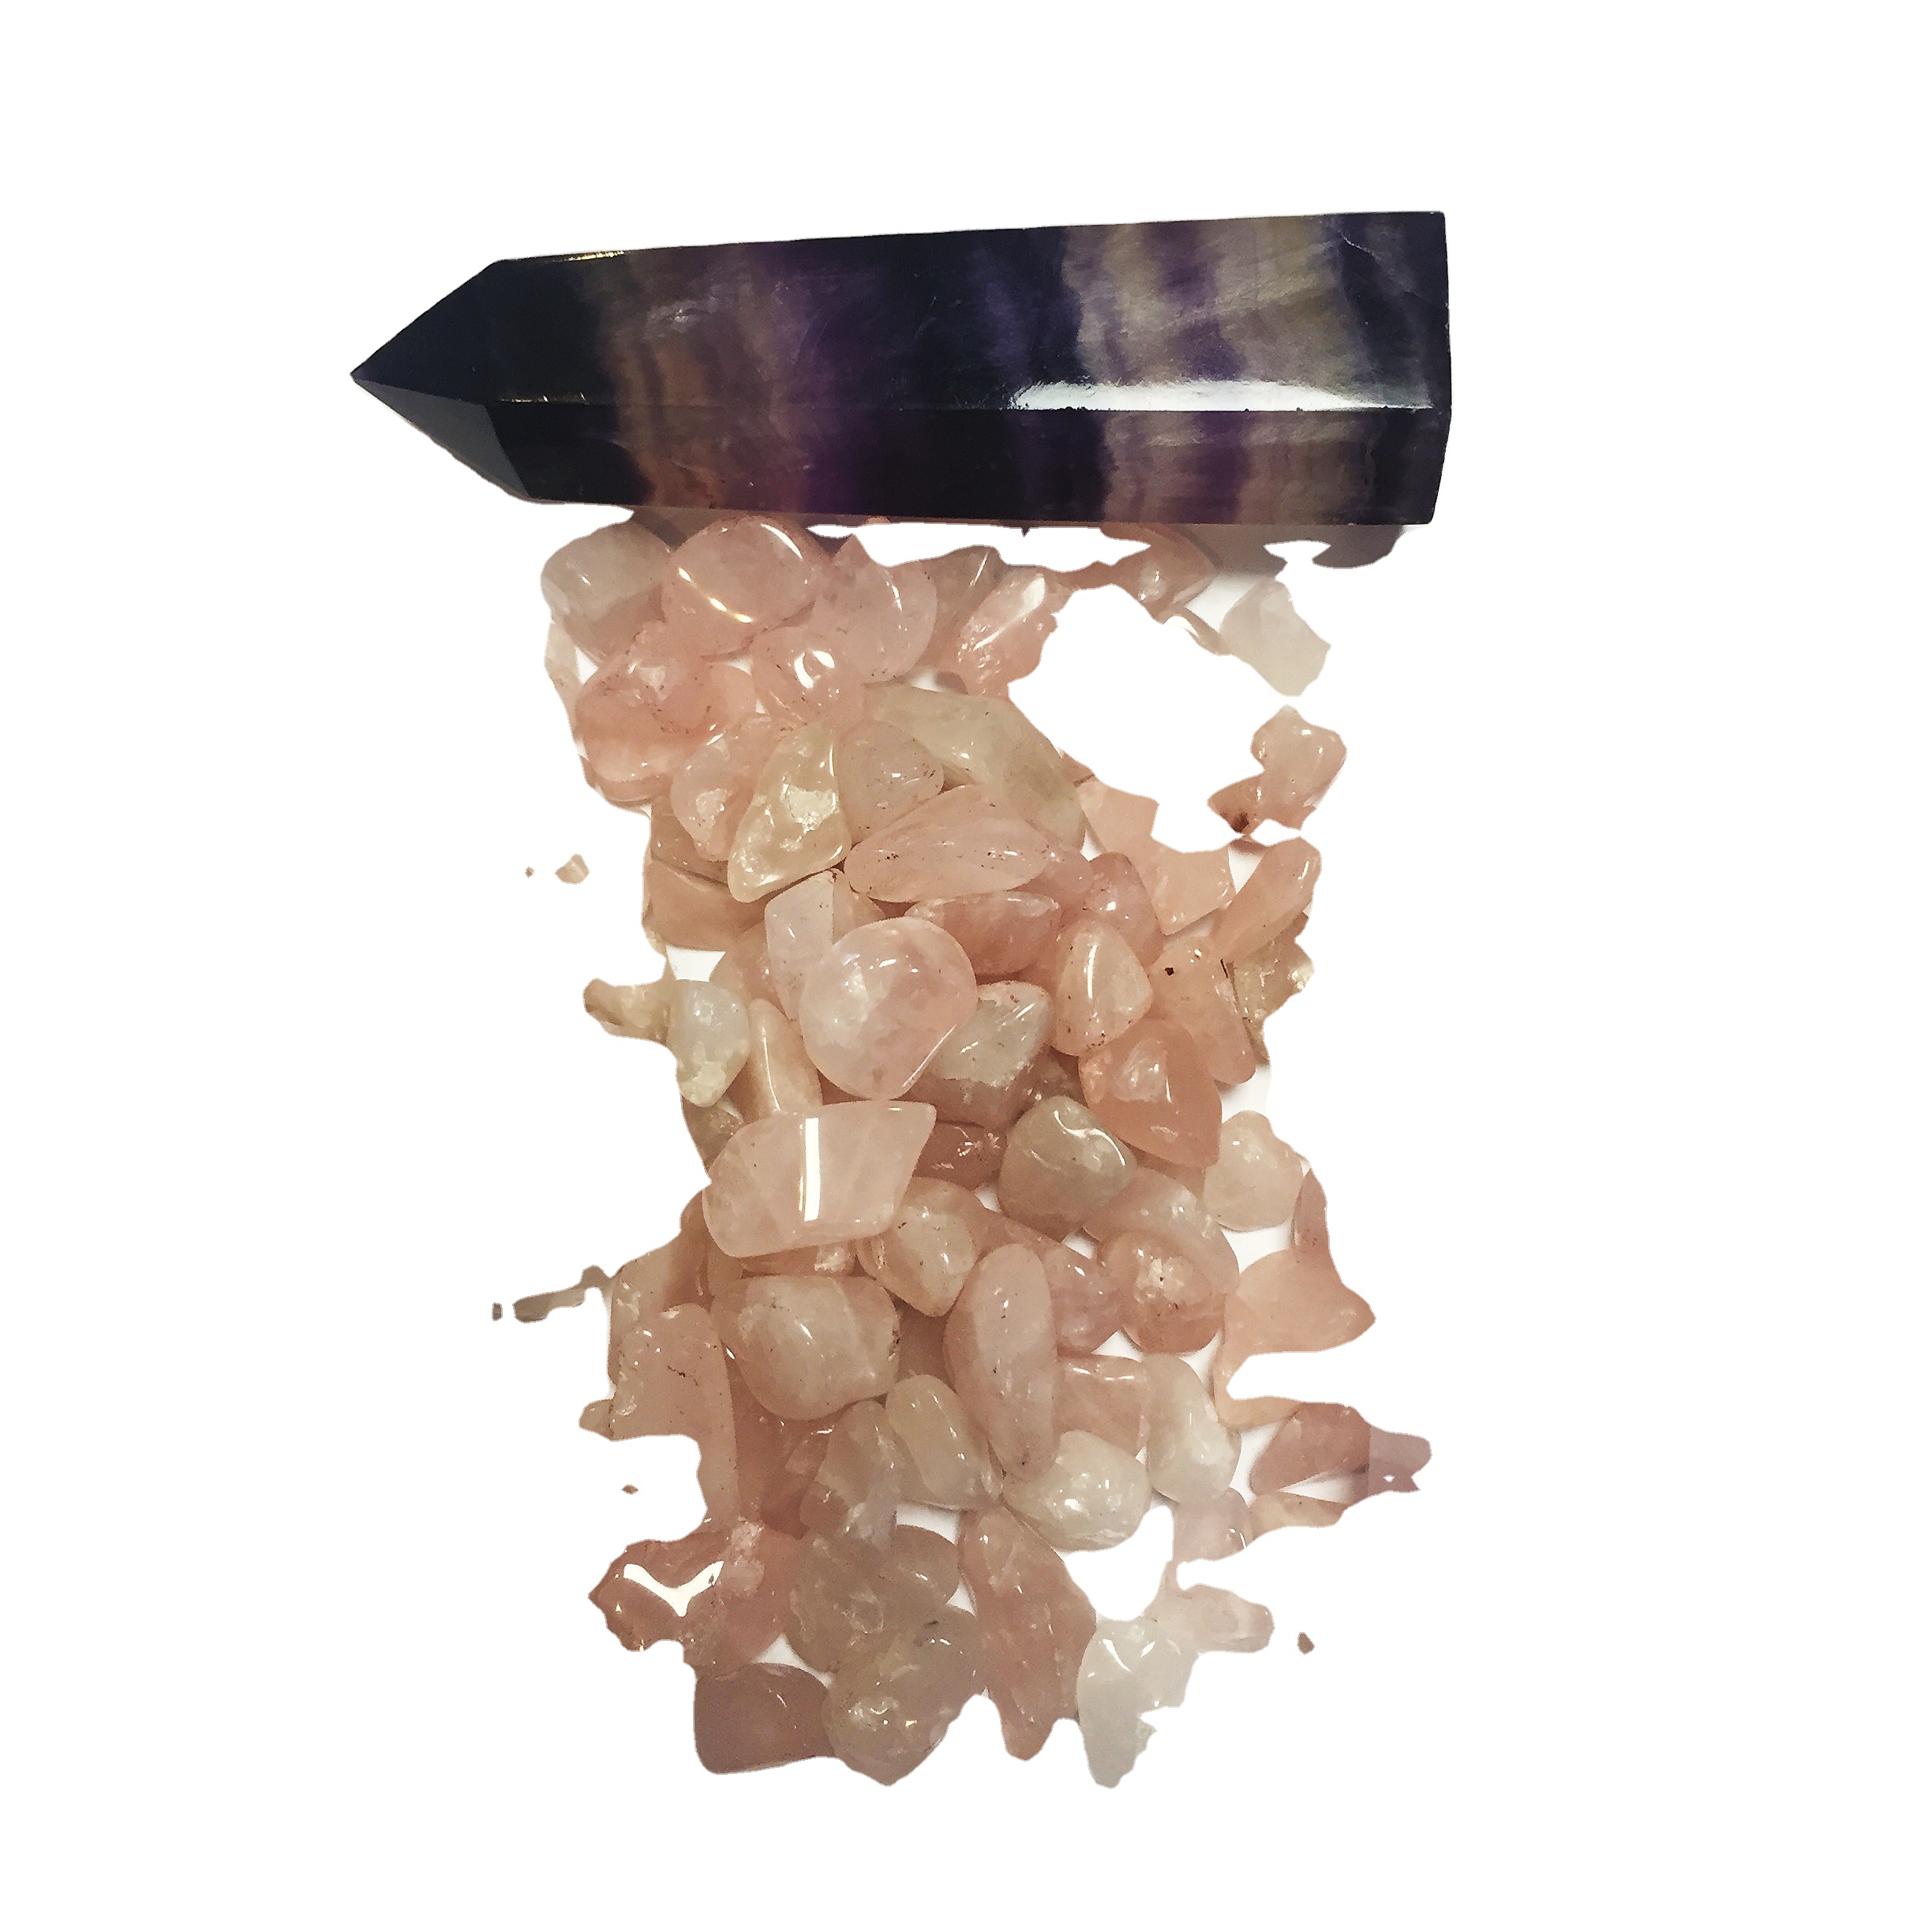 Crystal Healing Amethyst Crushed Stone